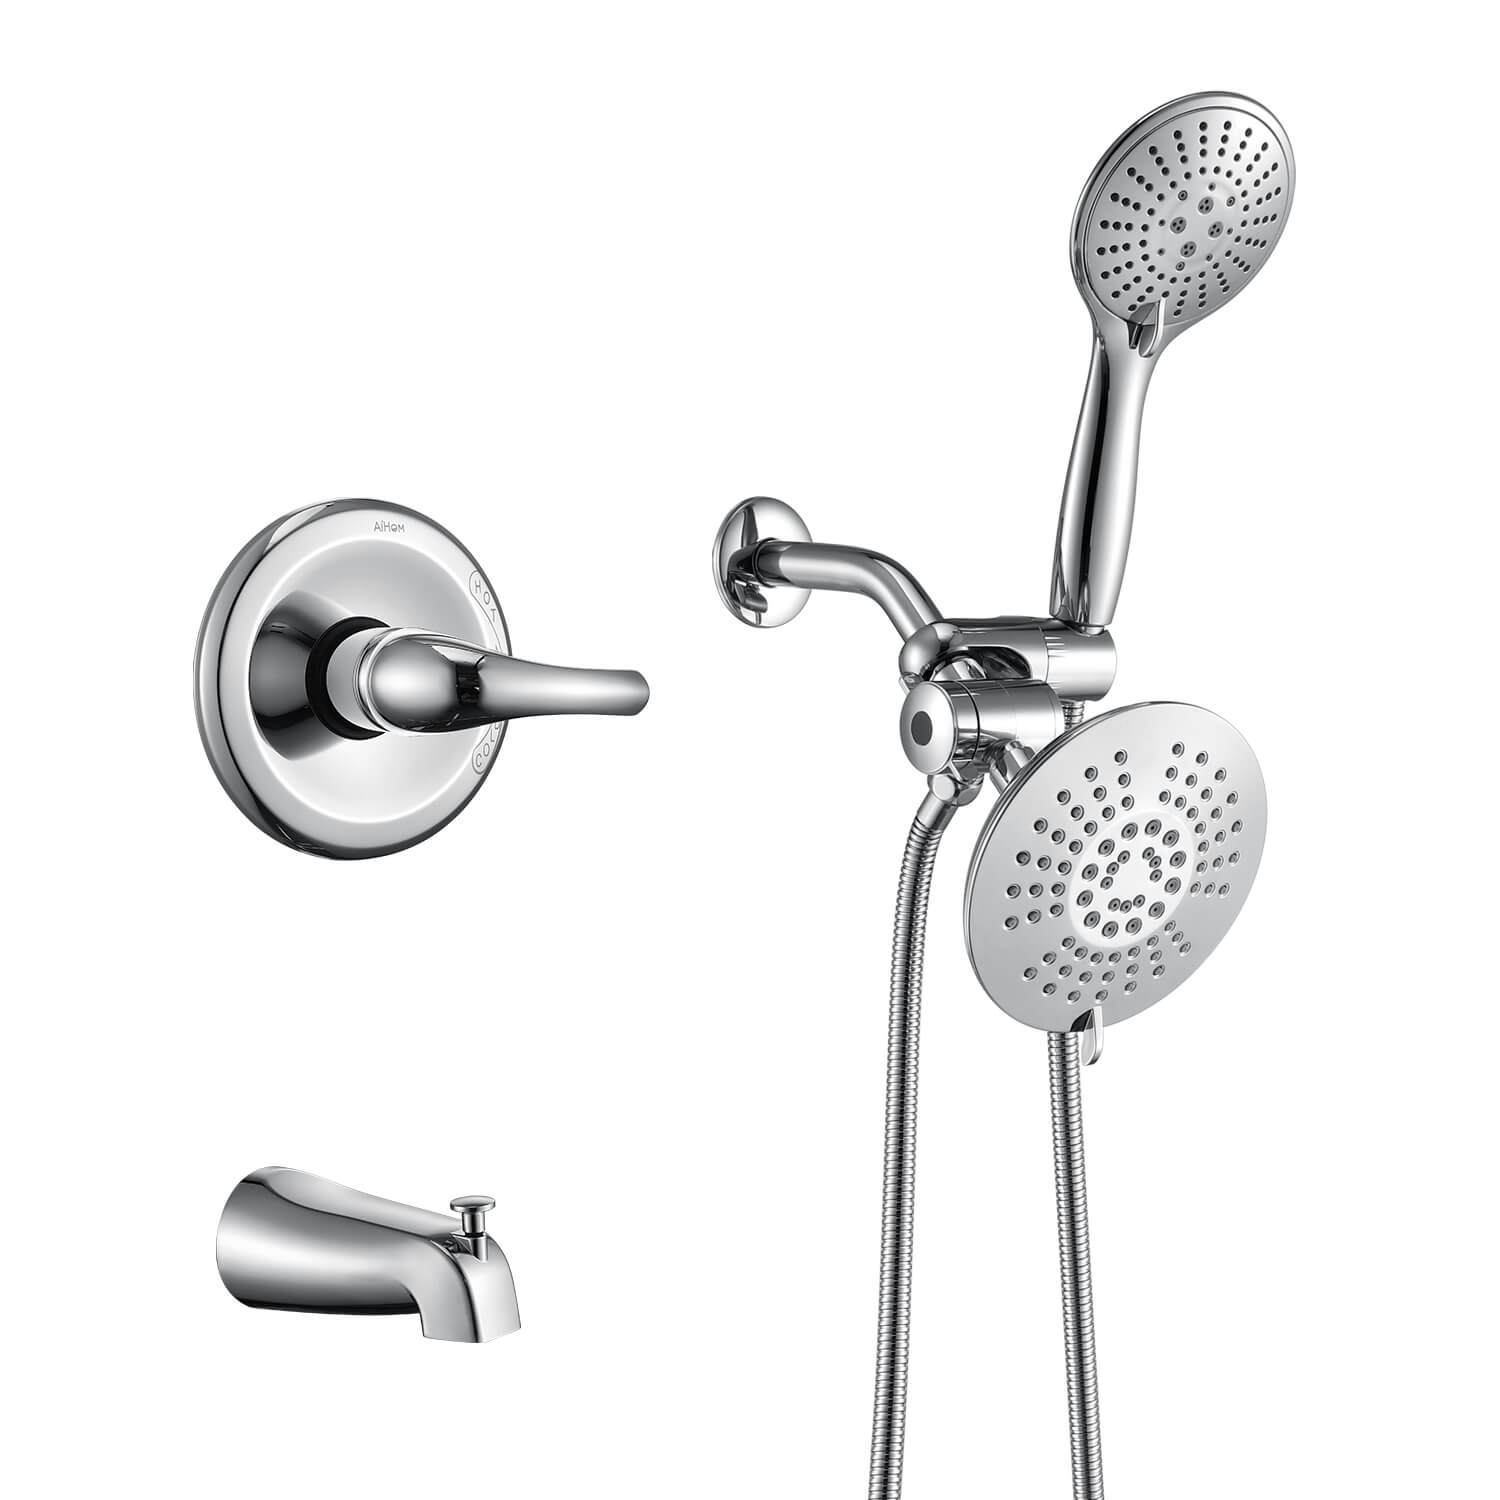 AIHOM Dual Shower Head Faucet Shower Trim Kit(Valve Included)